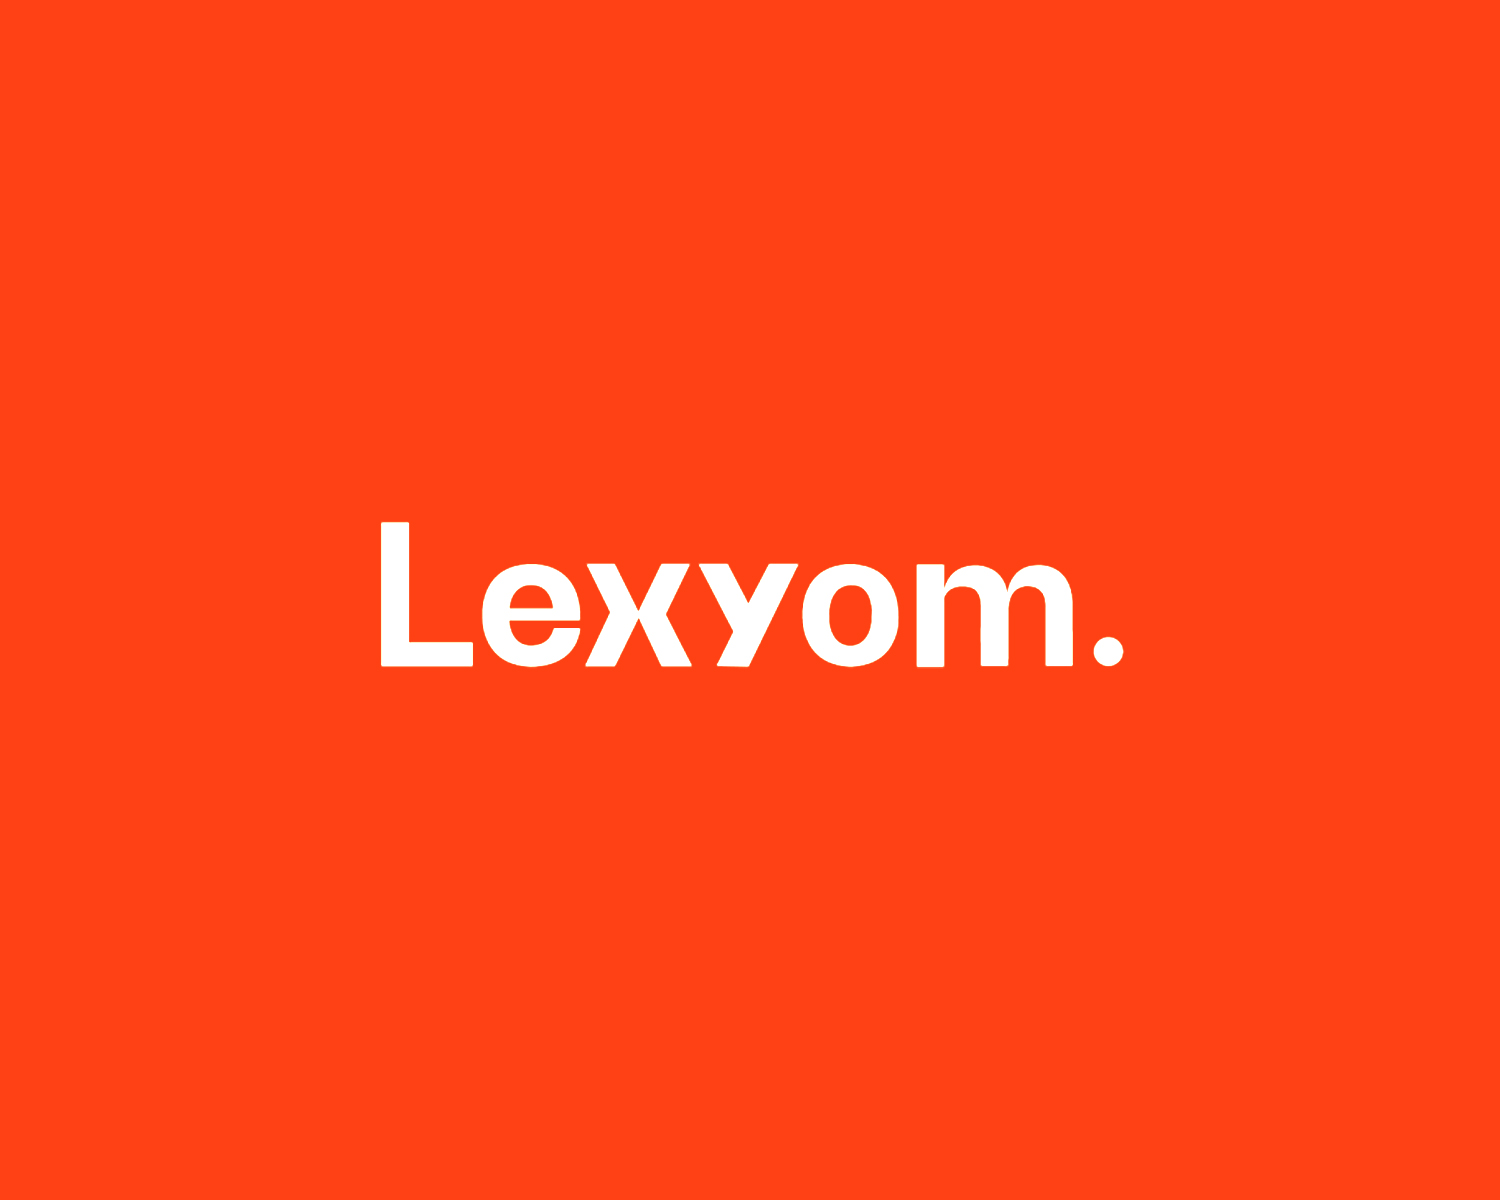 Lexyom